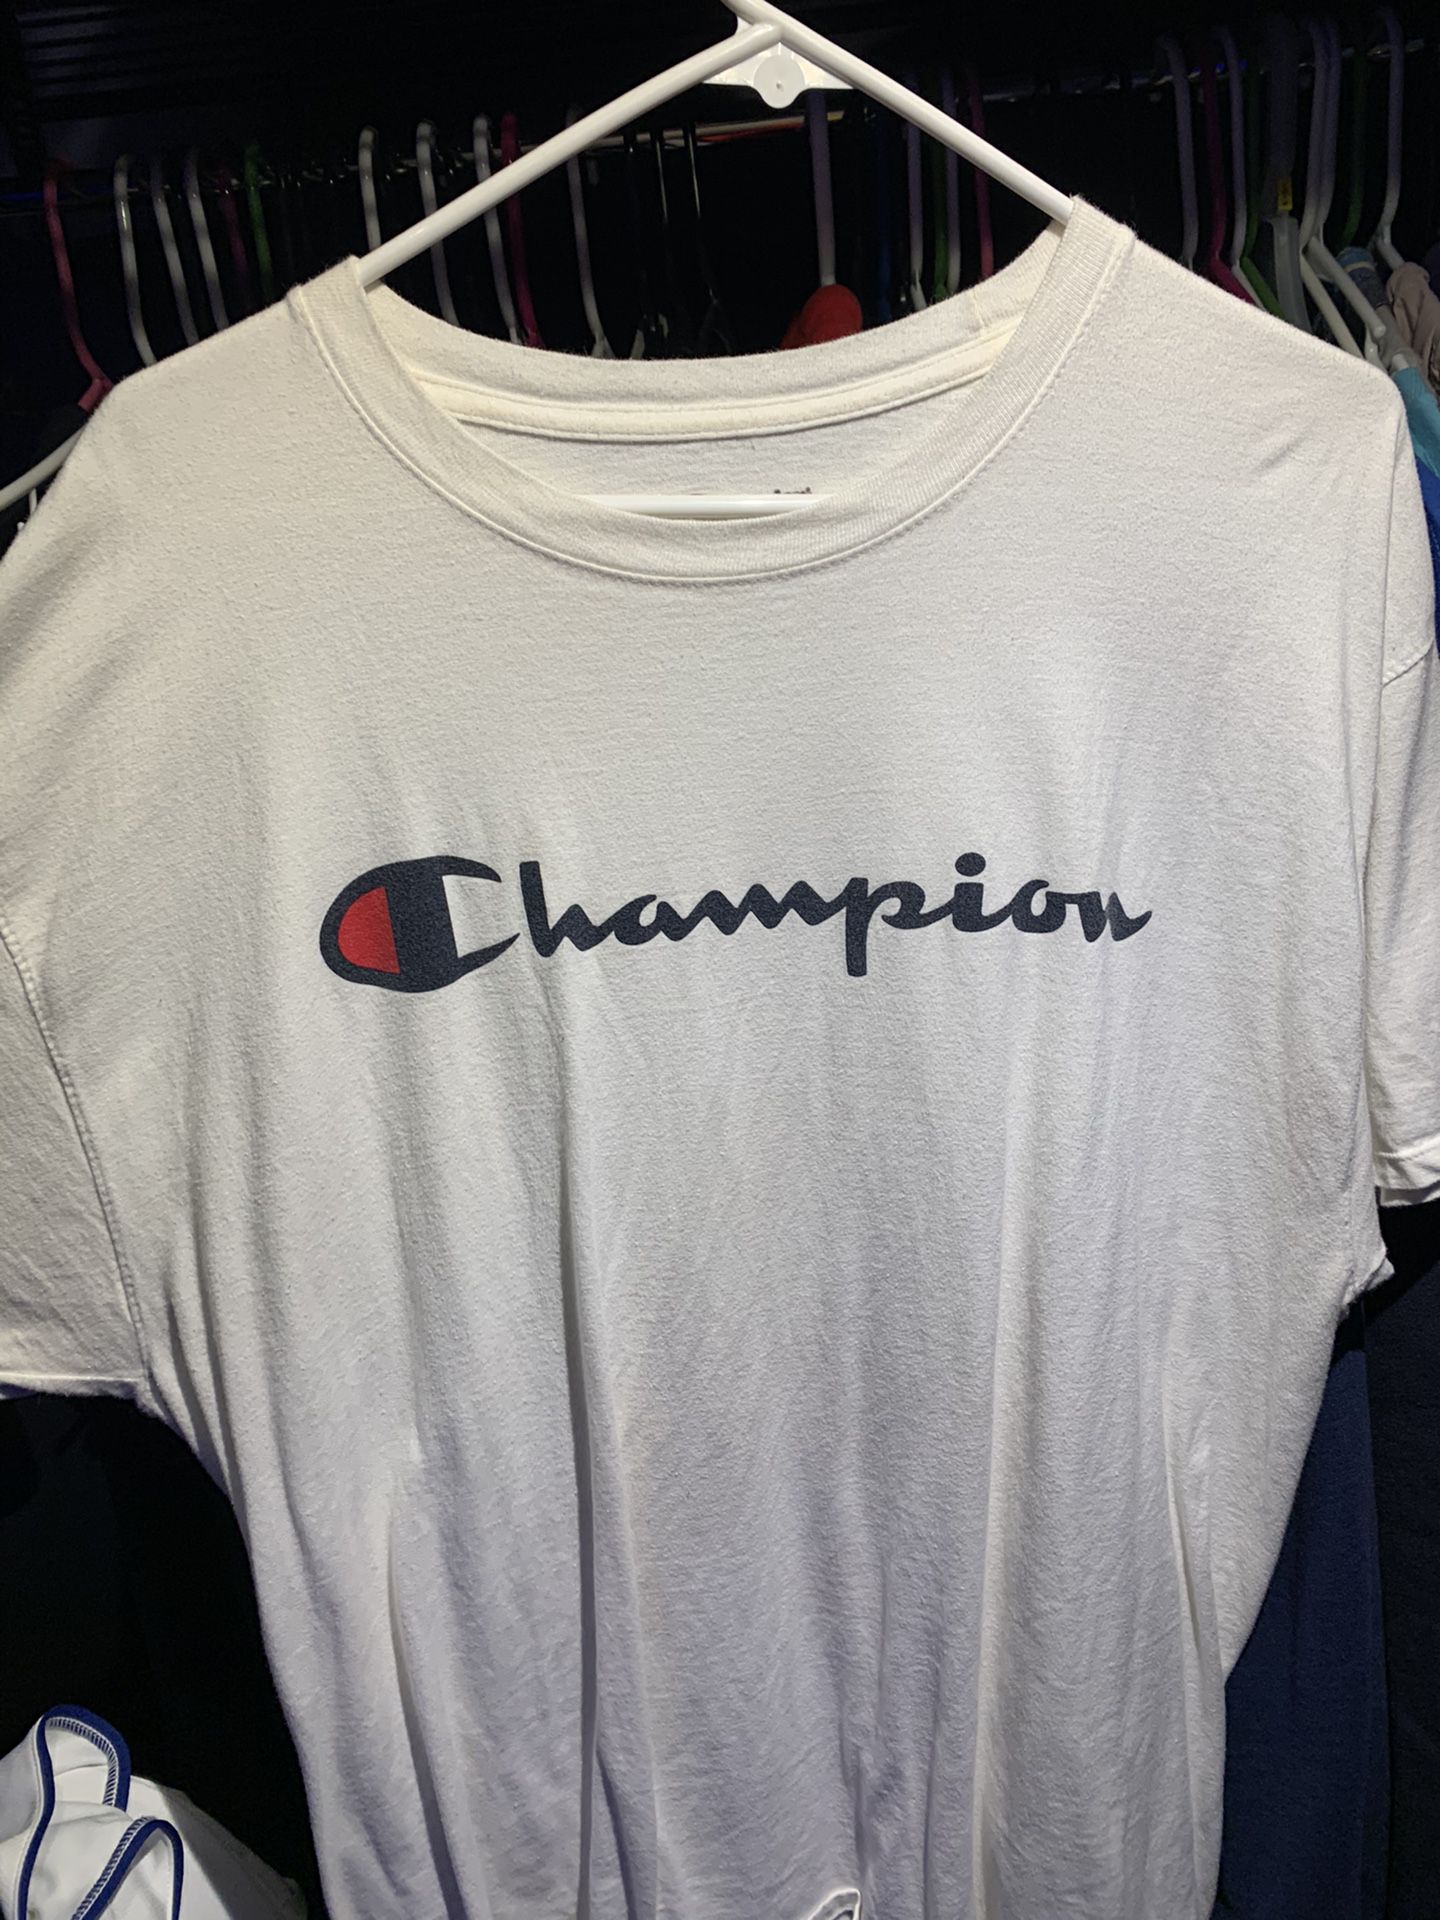 White Champion Shirt